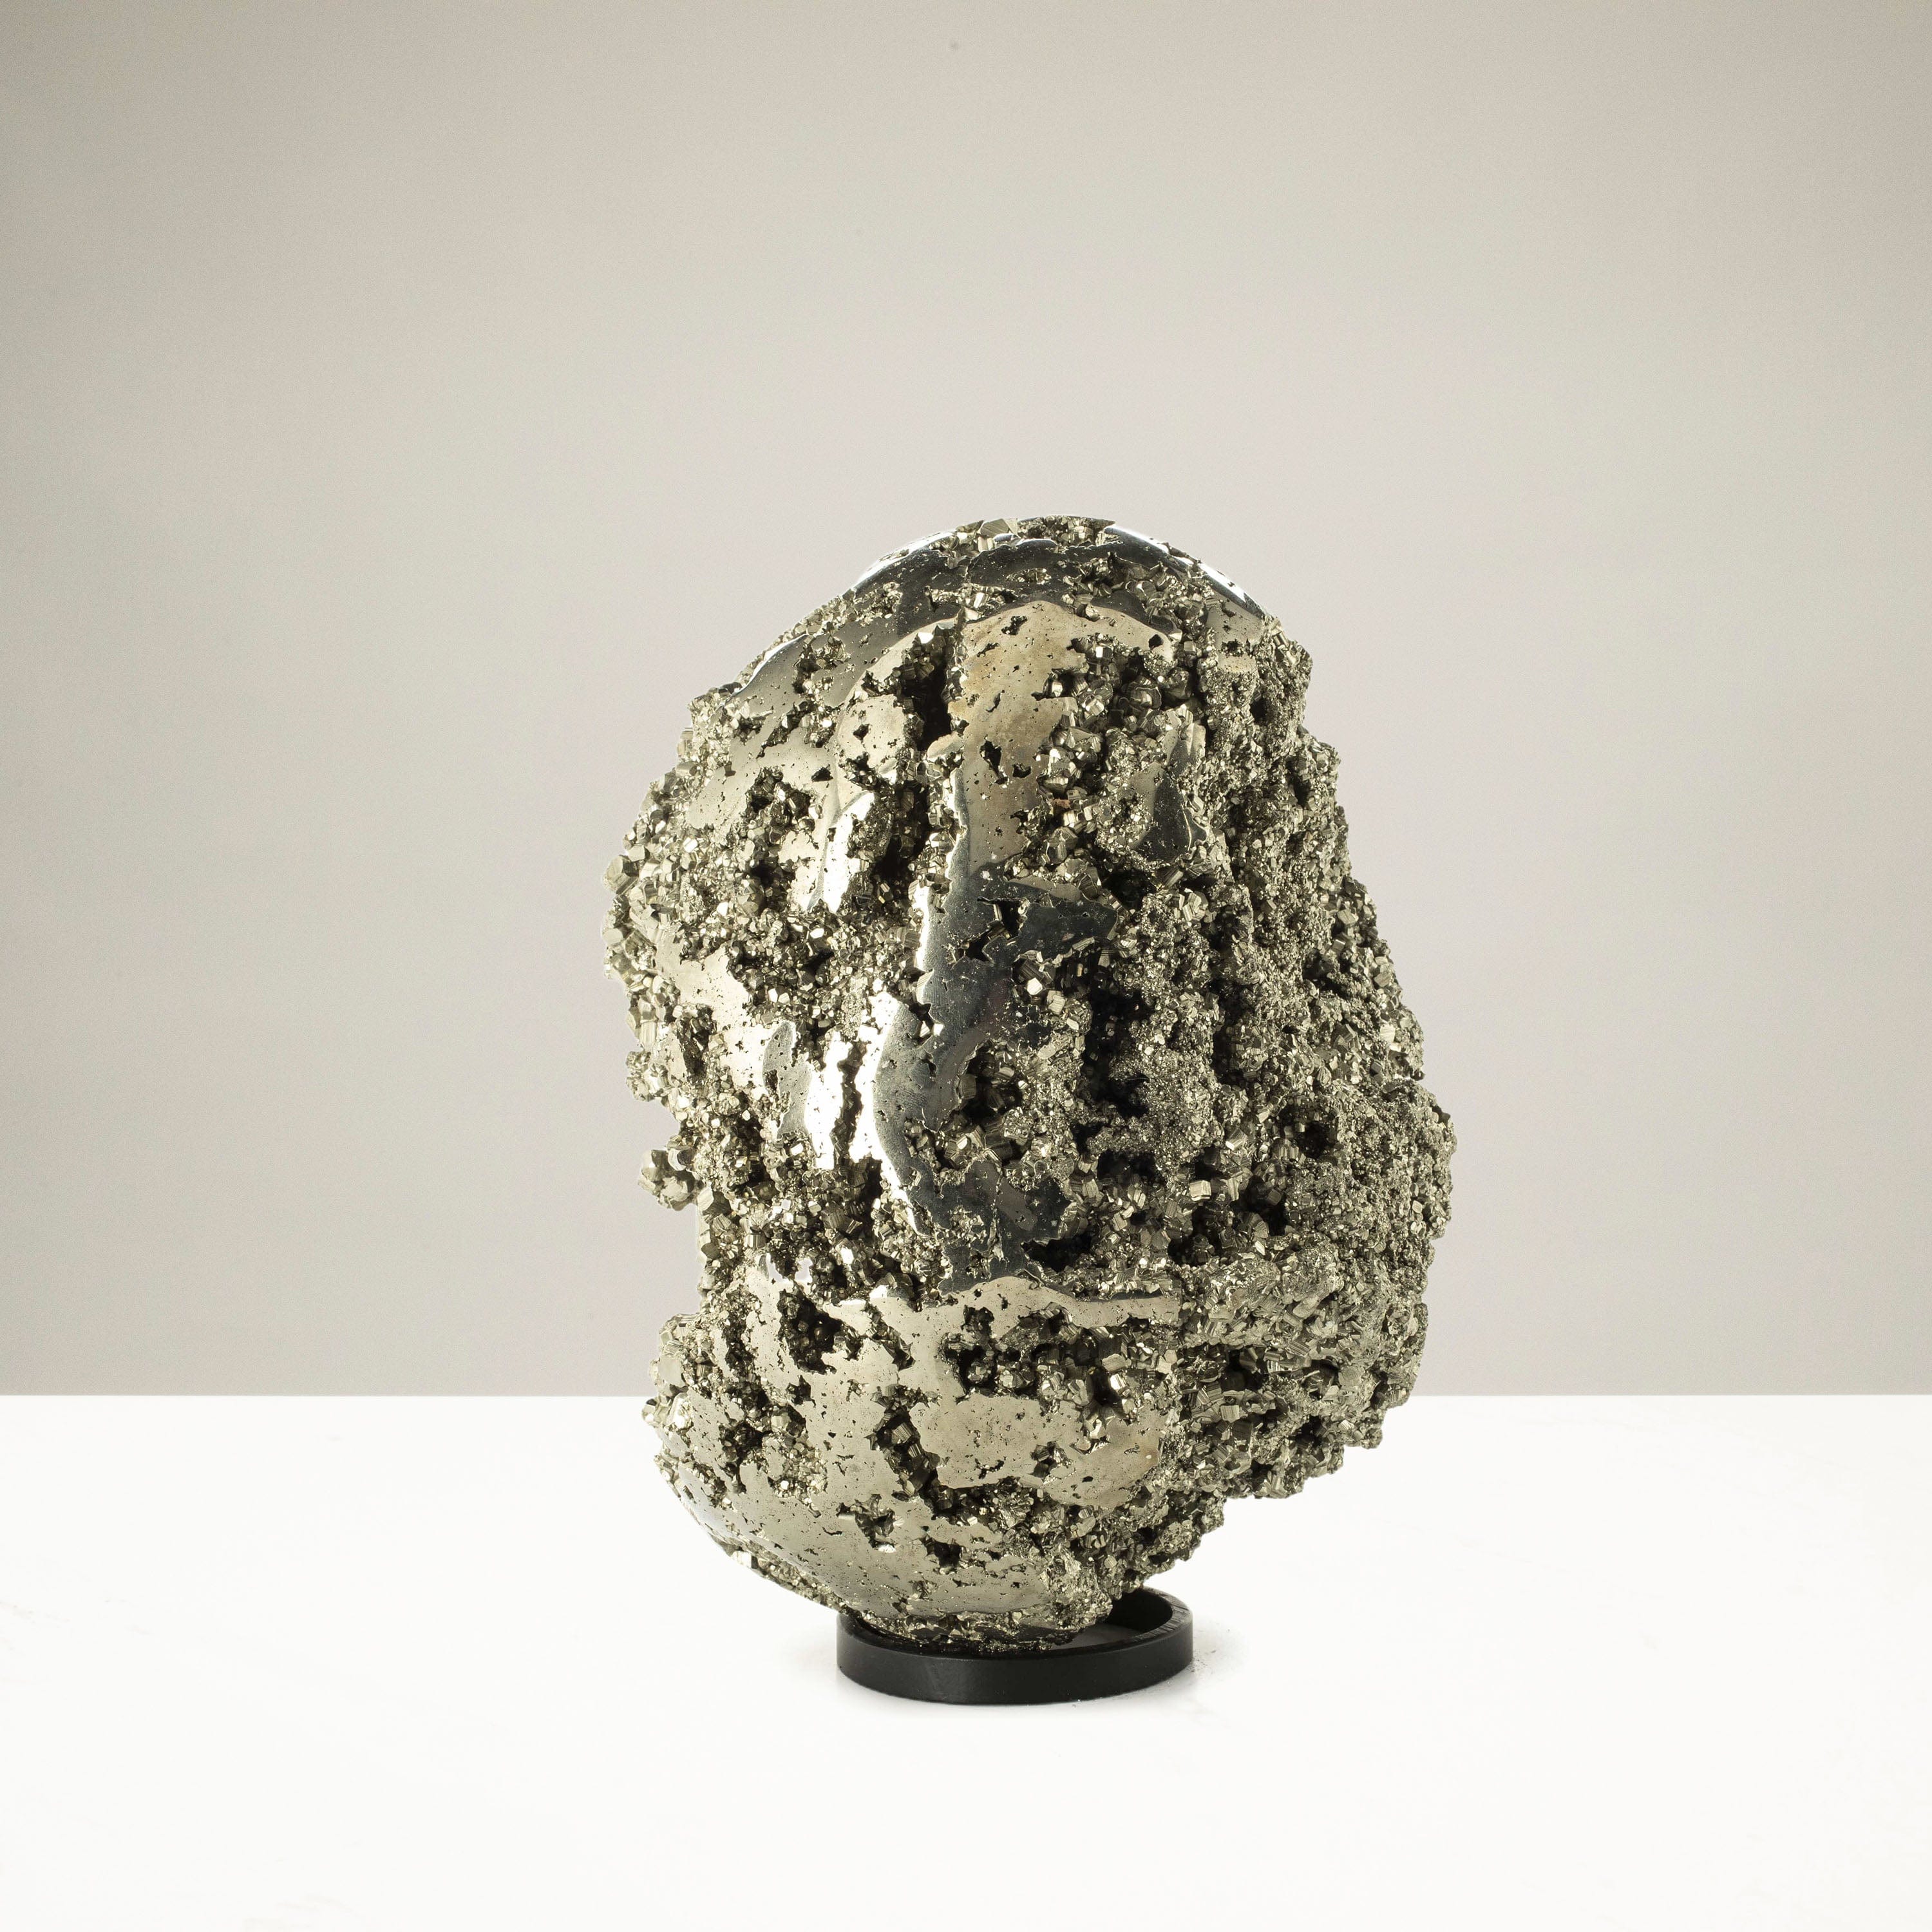 Kalifano Pyrite Natural Pyrite Egg Carving from Peru - 43 lb / 11‚Äù PC17000.001